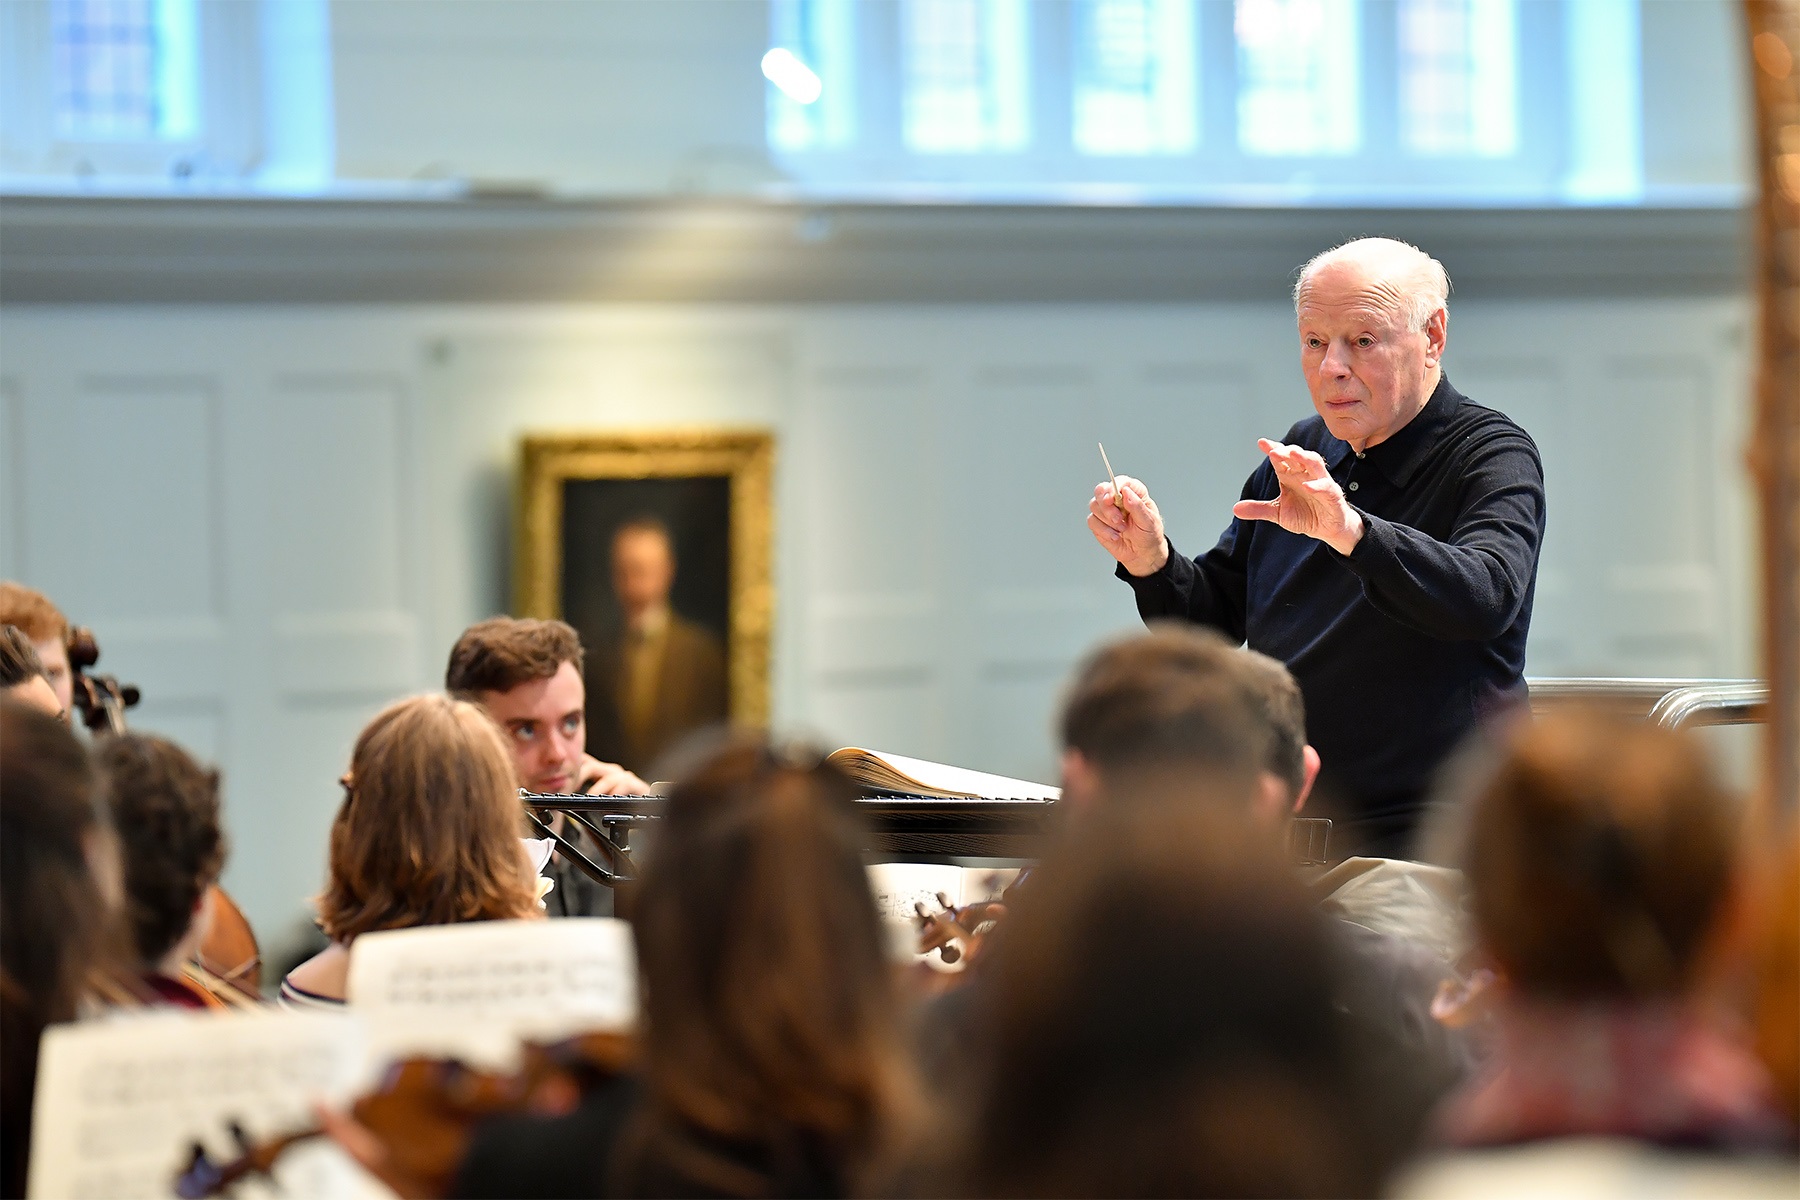 Bernard Haitink conducting students